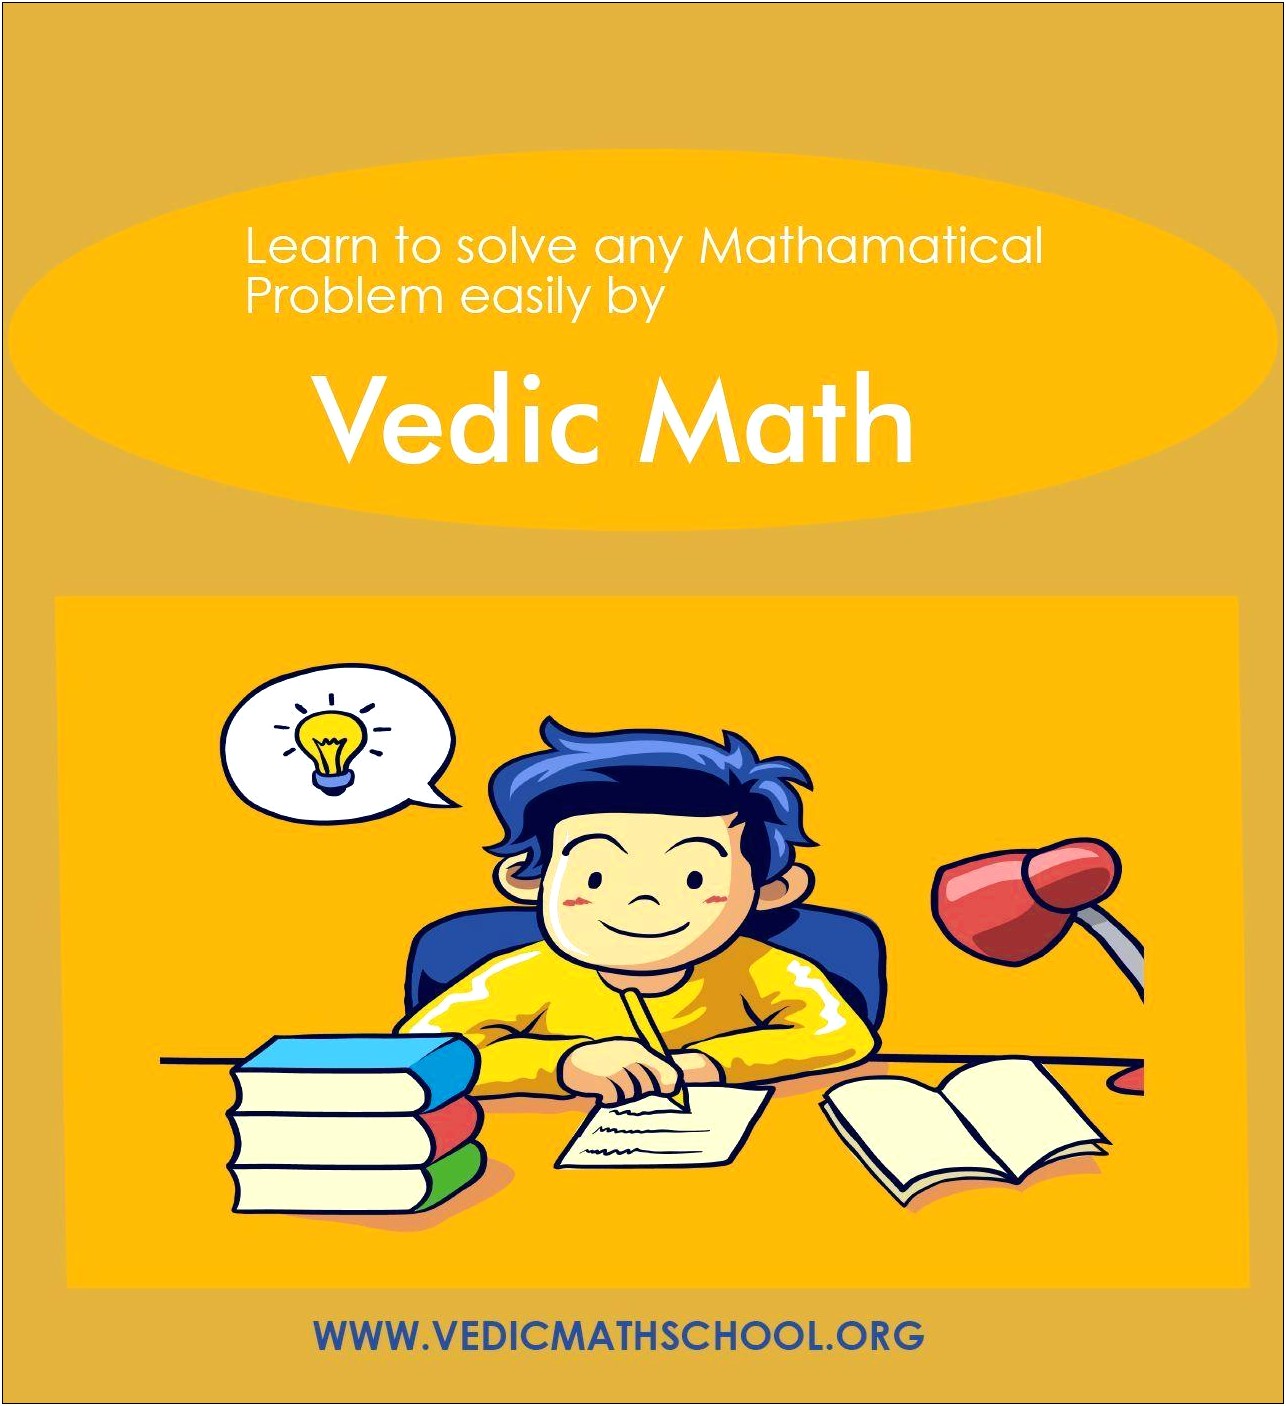 Vedic Mathematics Powerpoint Templates Free Download